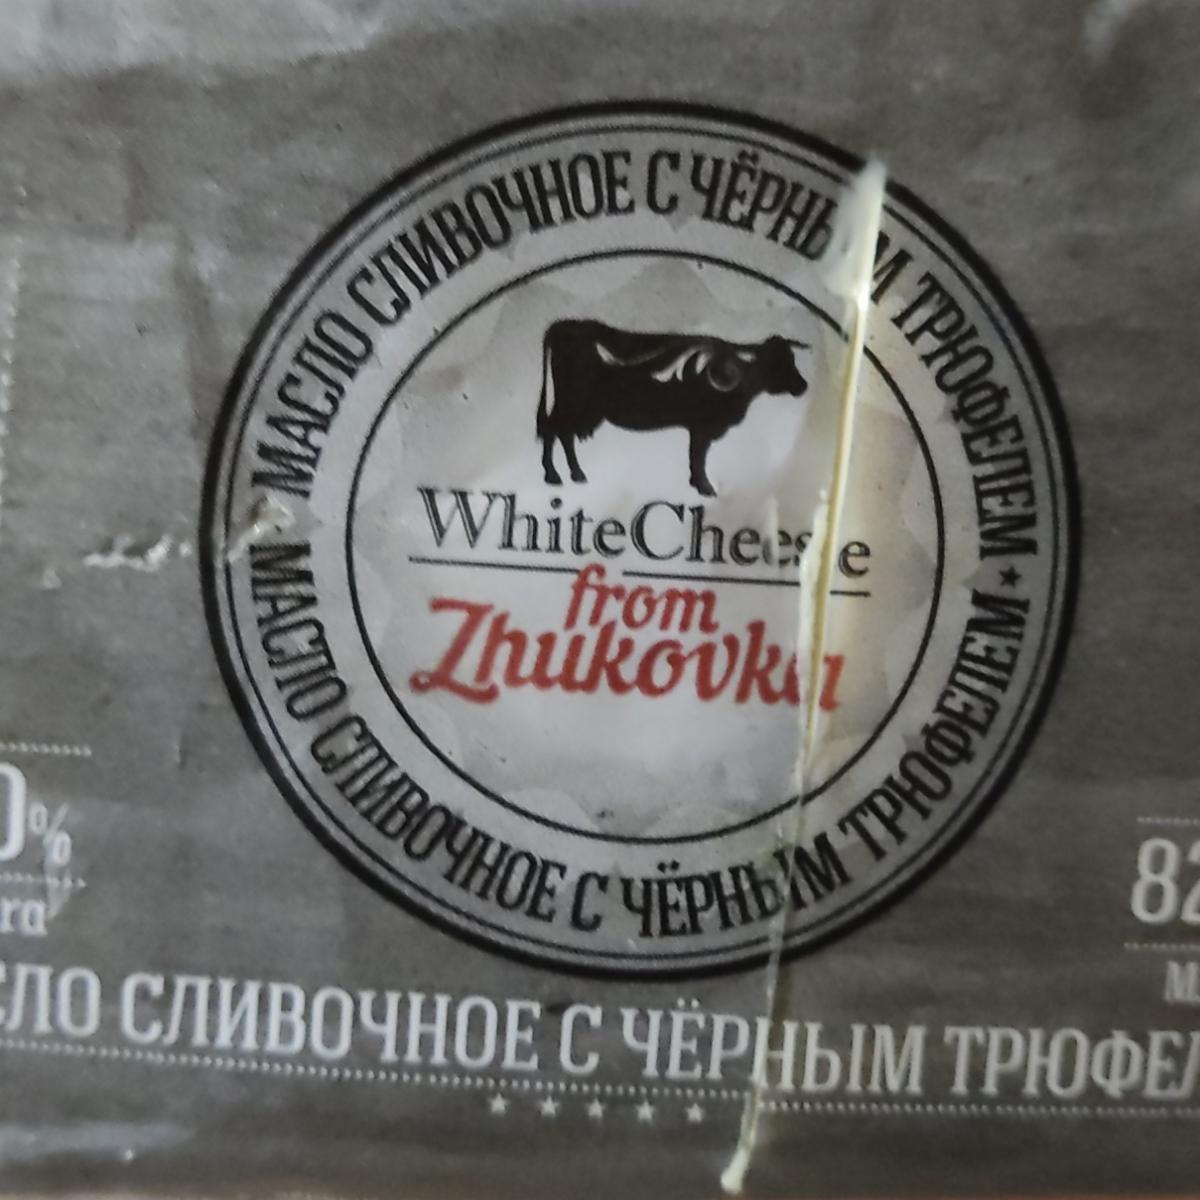 Фото - масло сливочное с чёрным трюфели White Cheese From Zhukovka